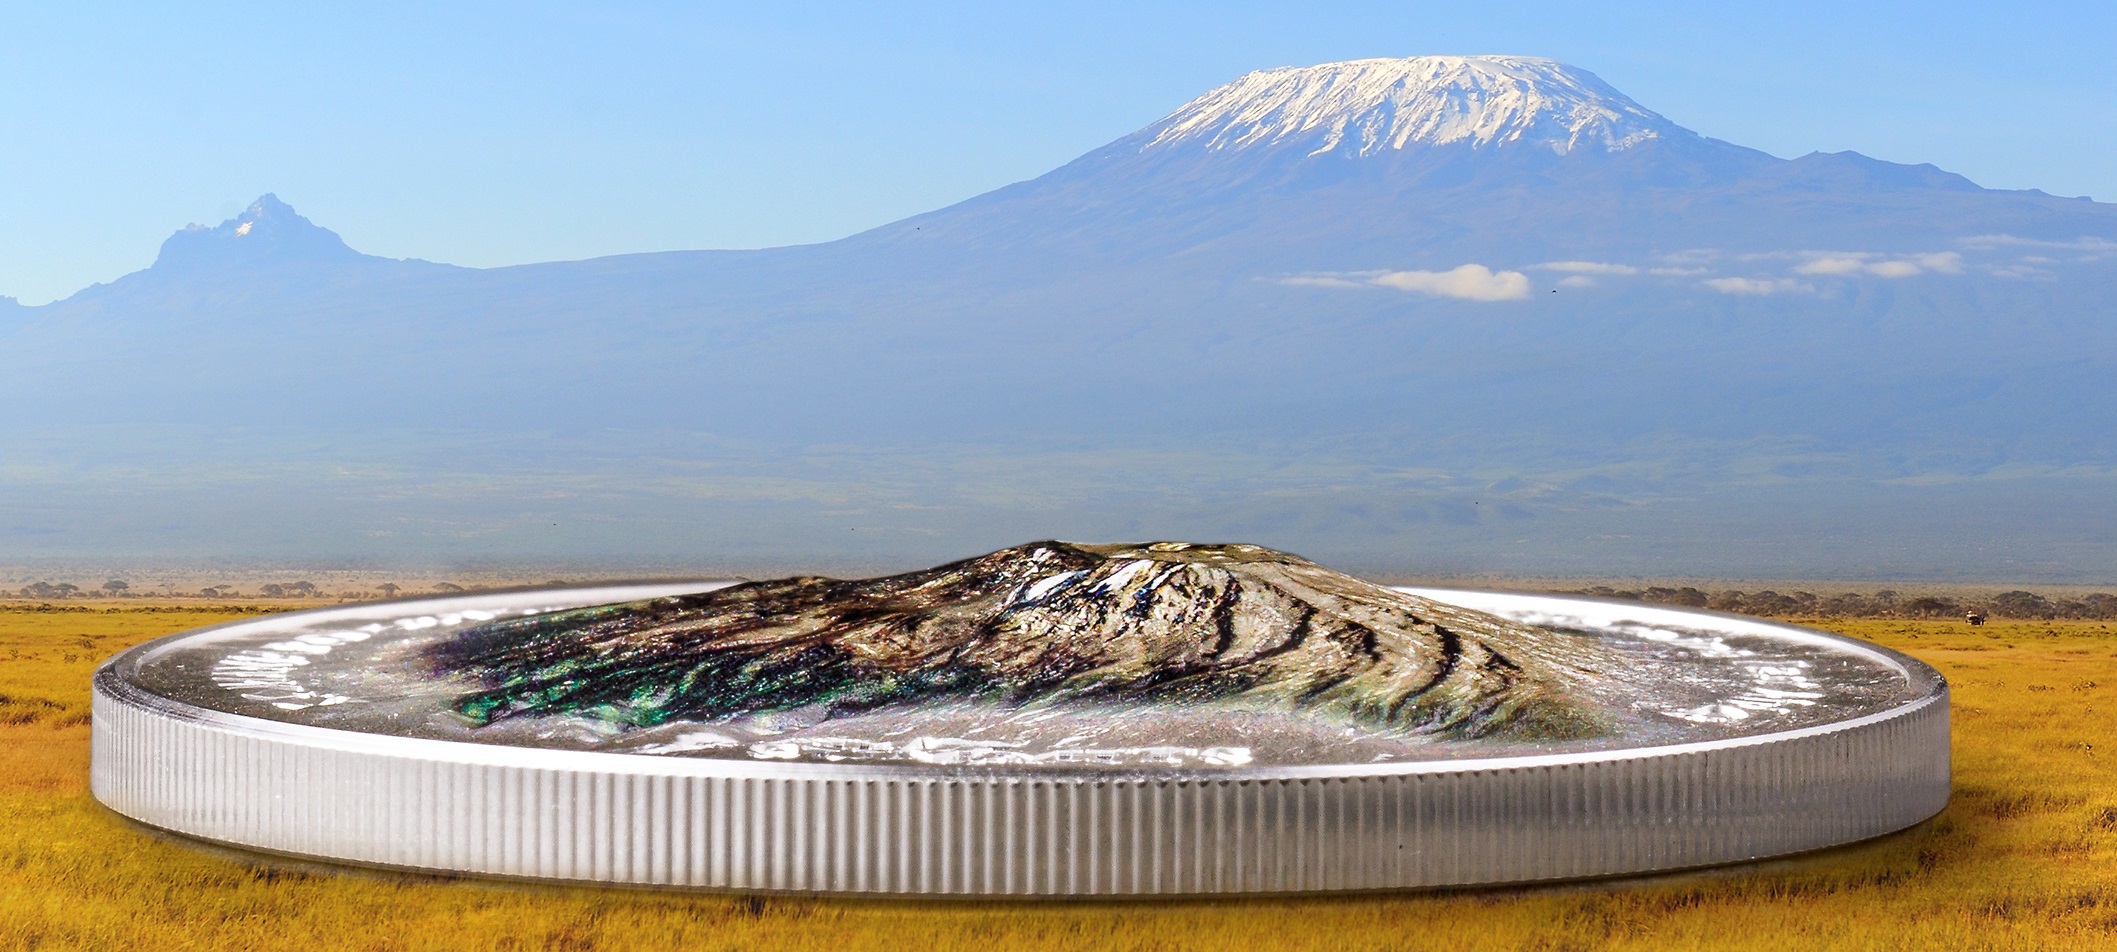 cook-isl-2019-7-sommets-kilimanjaro-relief